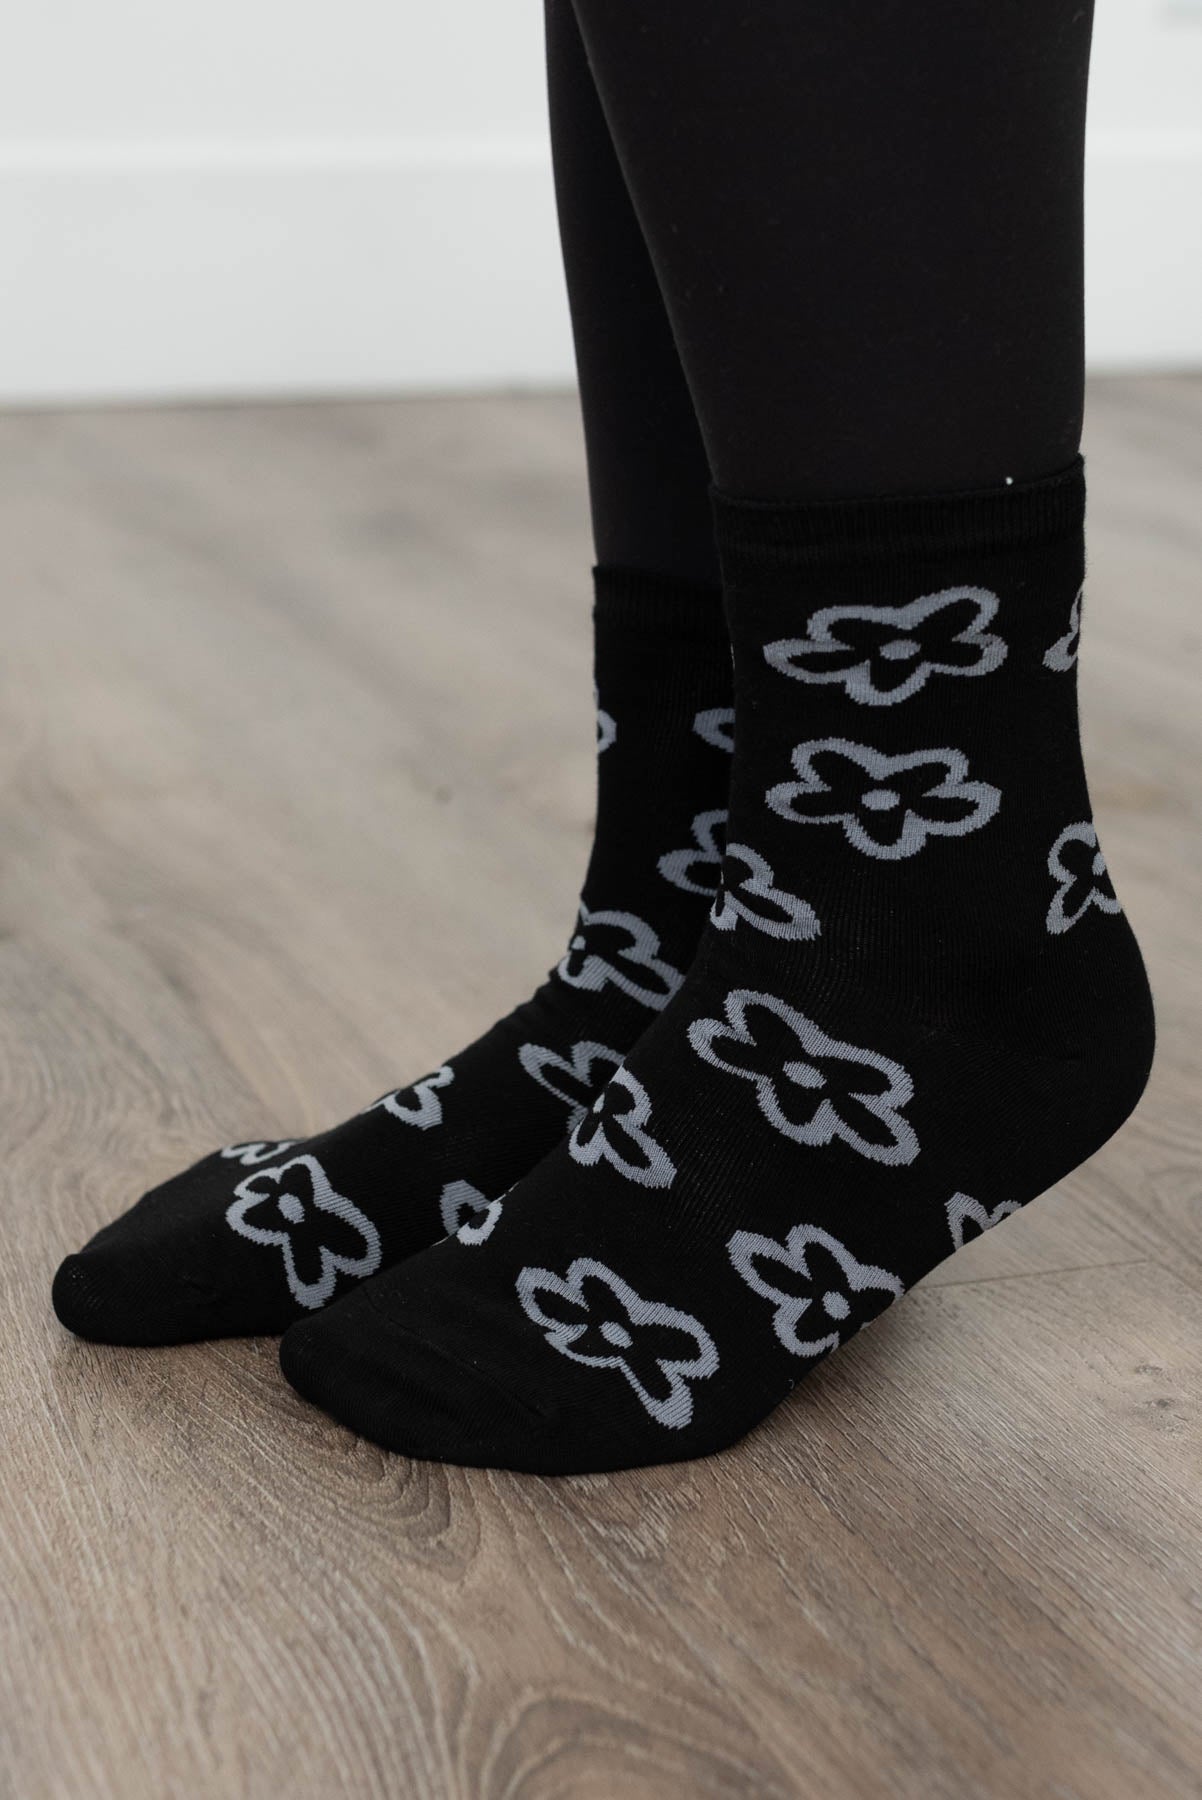 Side view of black flower socks